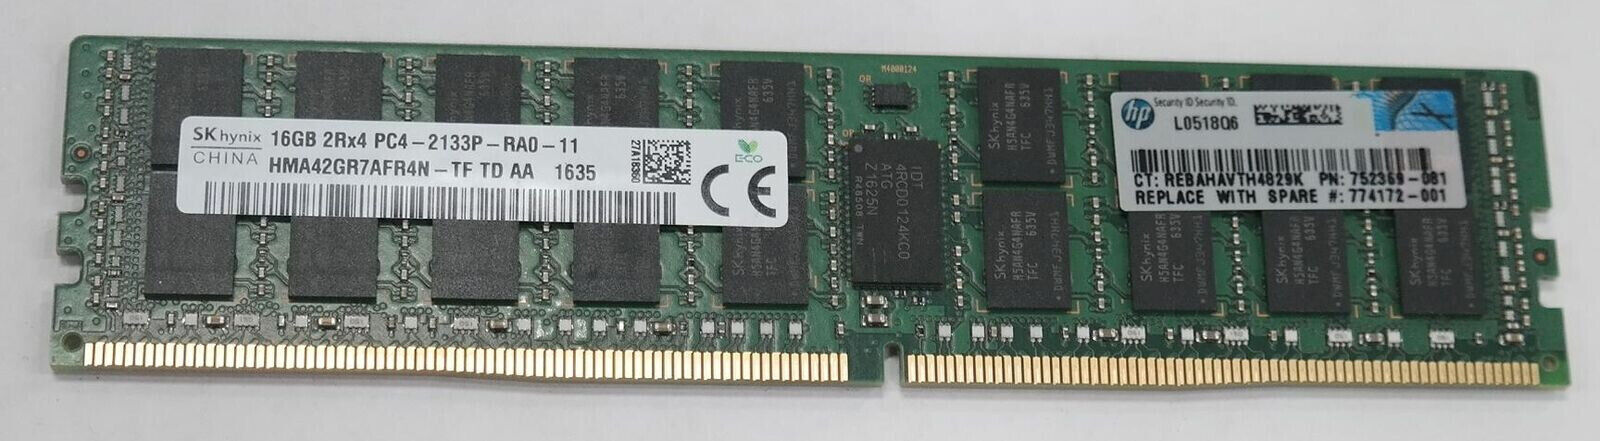 HP 16GB DDR4-2133 RDIMM 726719-B21 774172-001 752369-081 726719-S21 Memory RAM